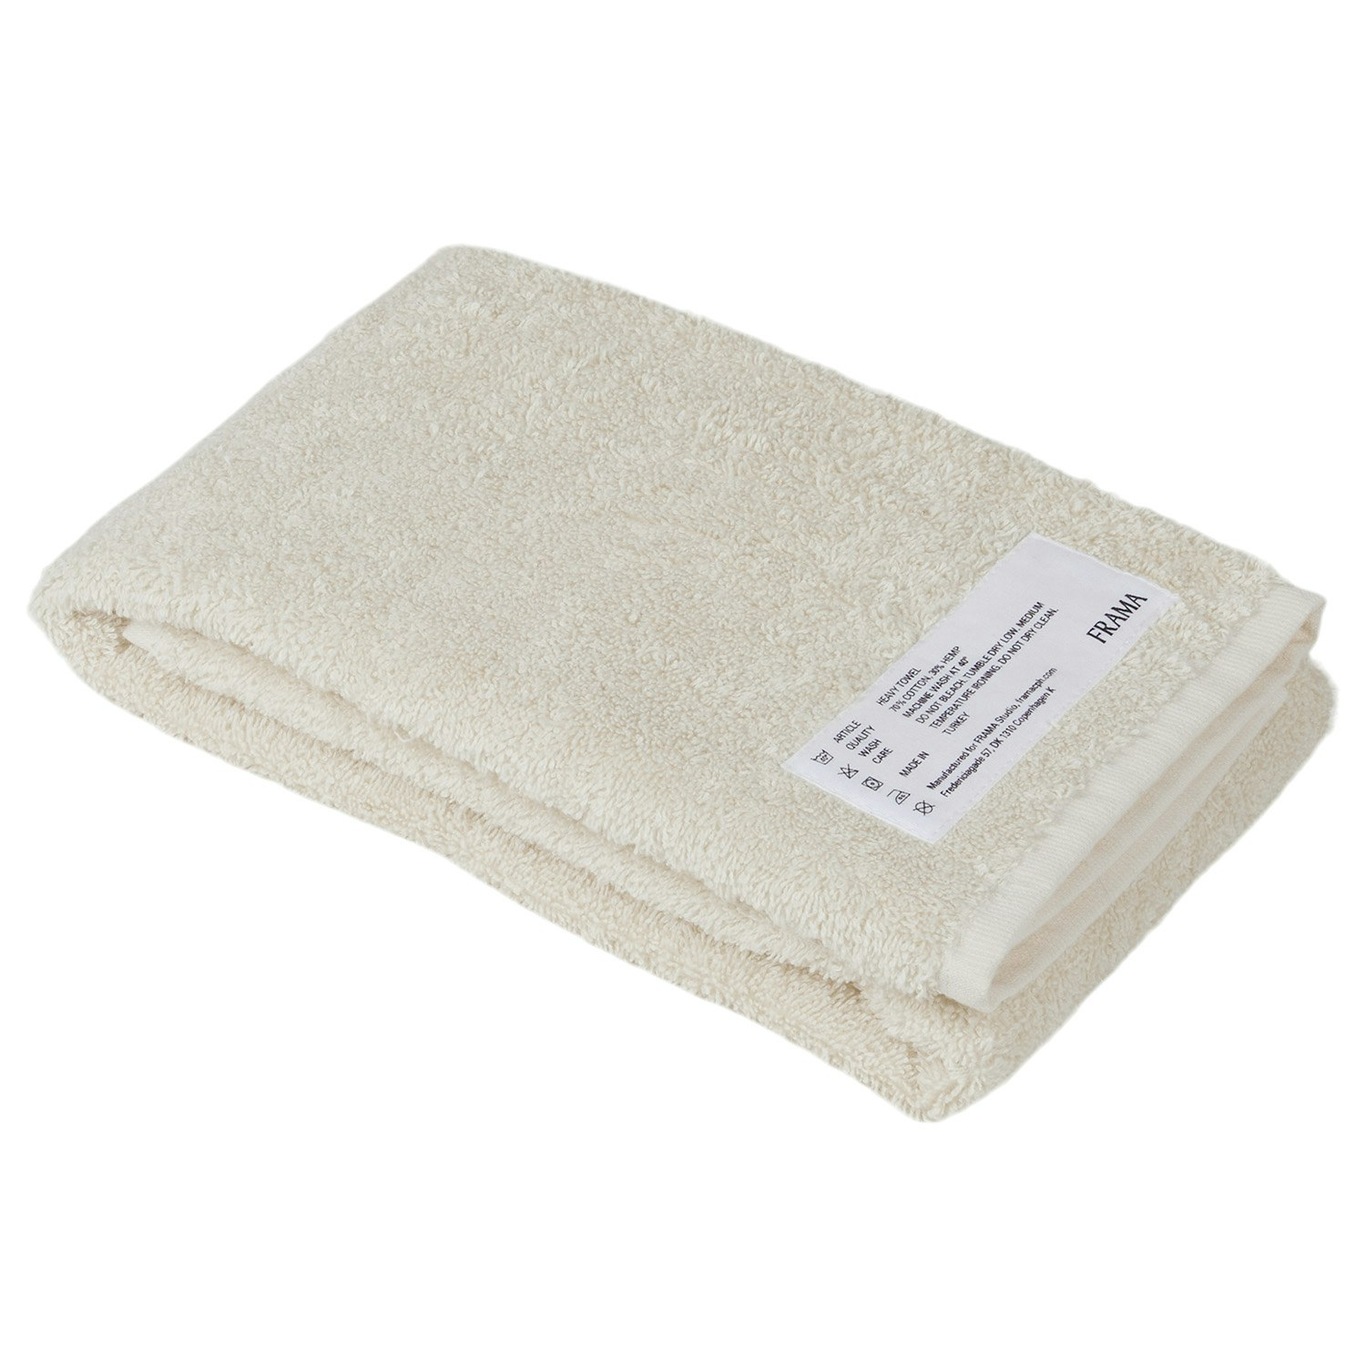 Heavy Towel Towel 50x80 cm, Bone White